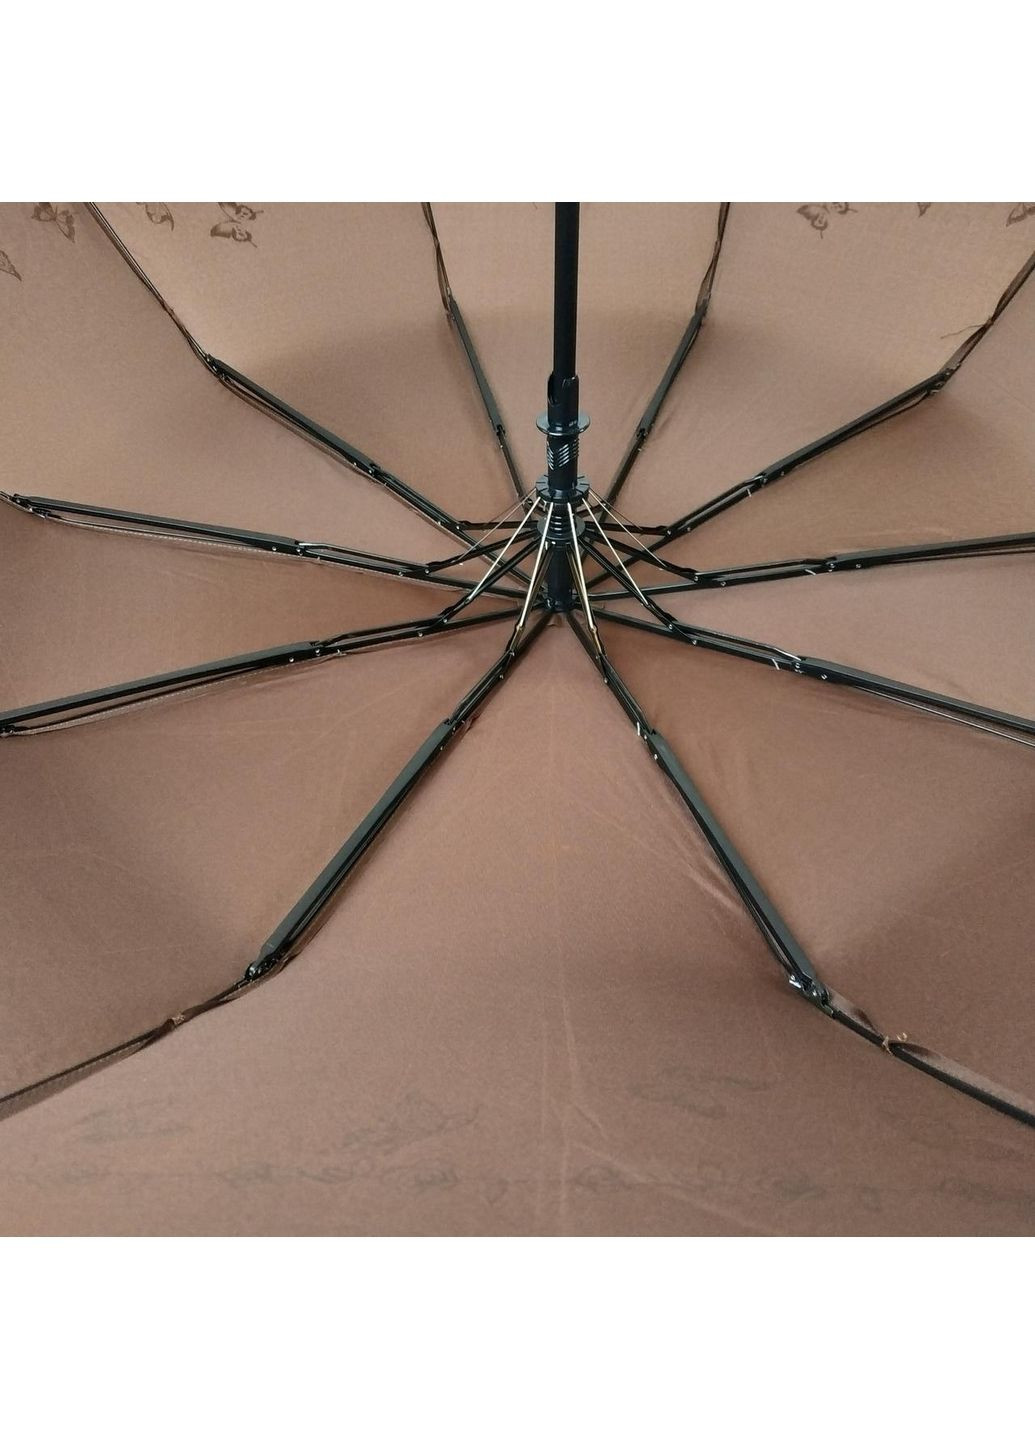 Женский зонт полуавтомат Bellissimo (282585921)